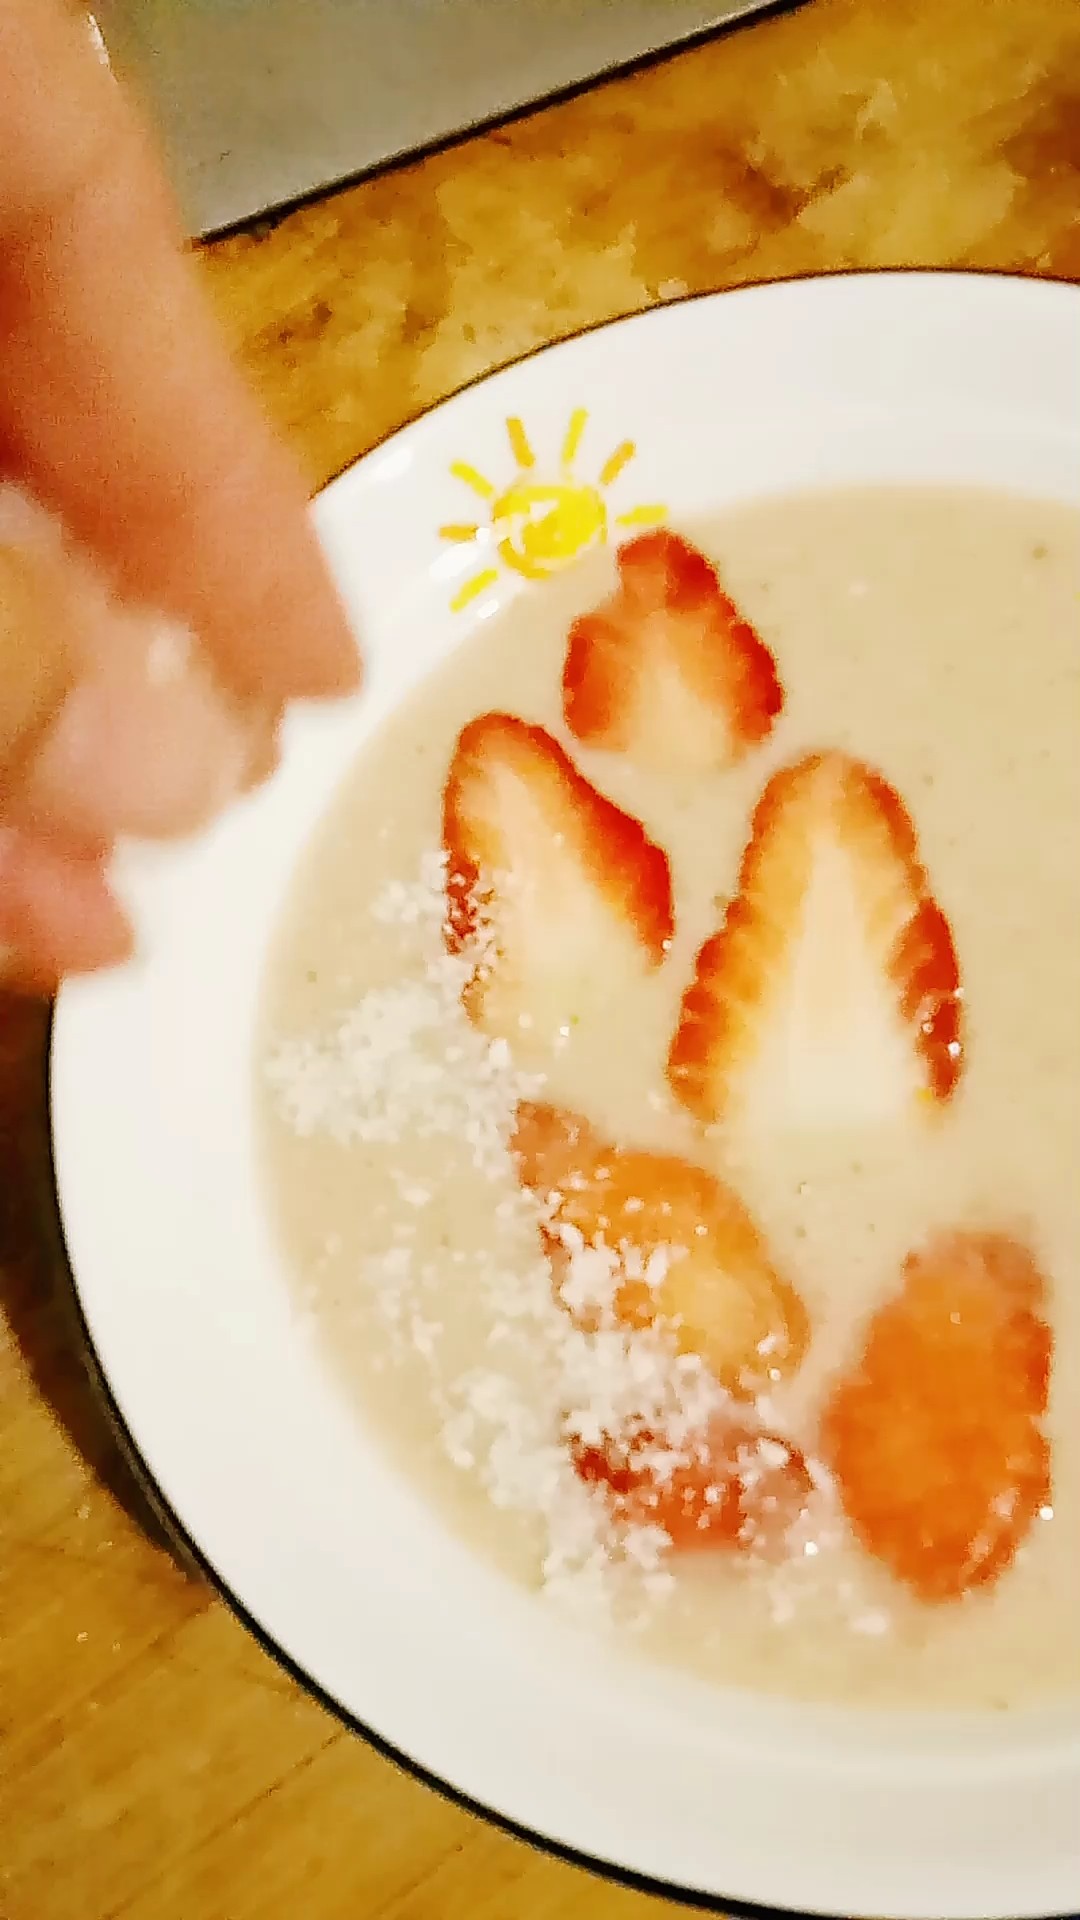 Strawberry Smoothie recipe